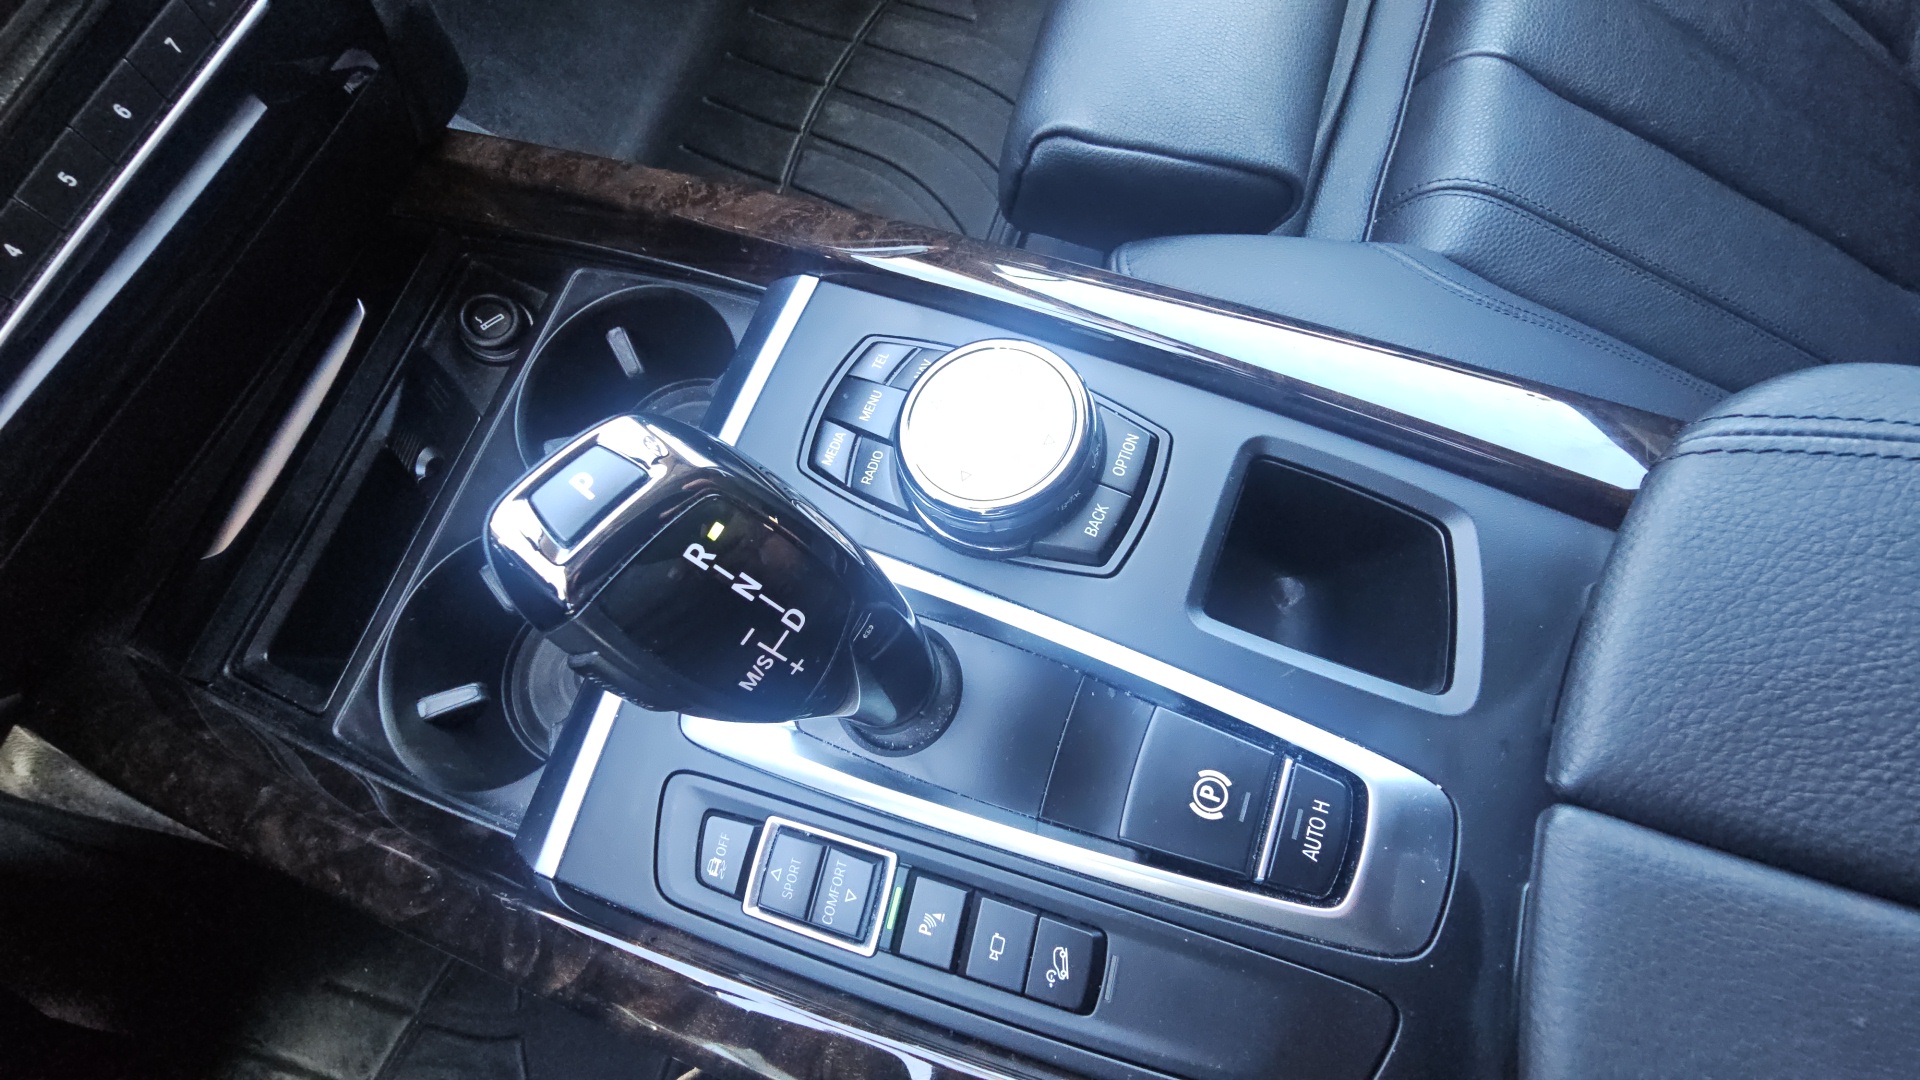 2016 BMW X5 xDrive50i AWD, Twin Turbo V8, Navigation, Sunroof, 18